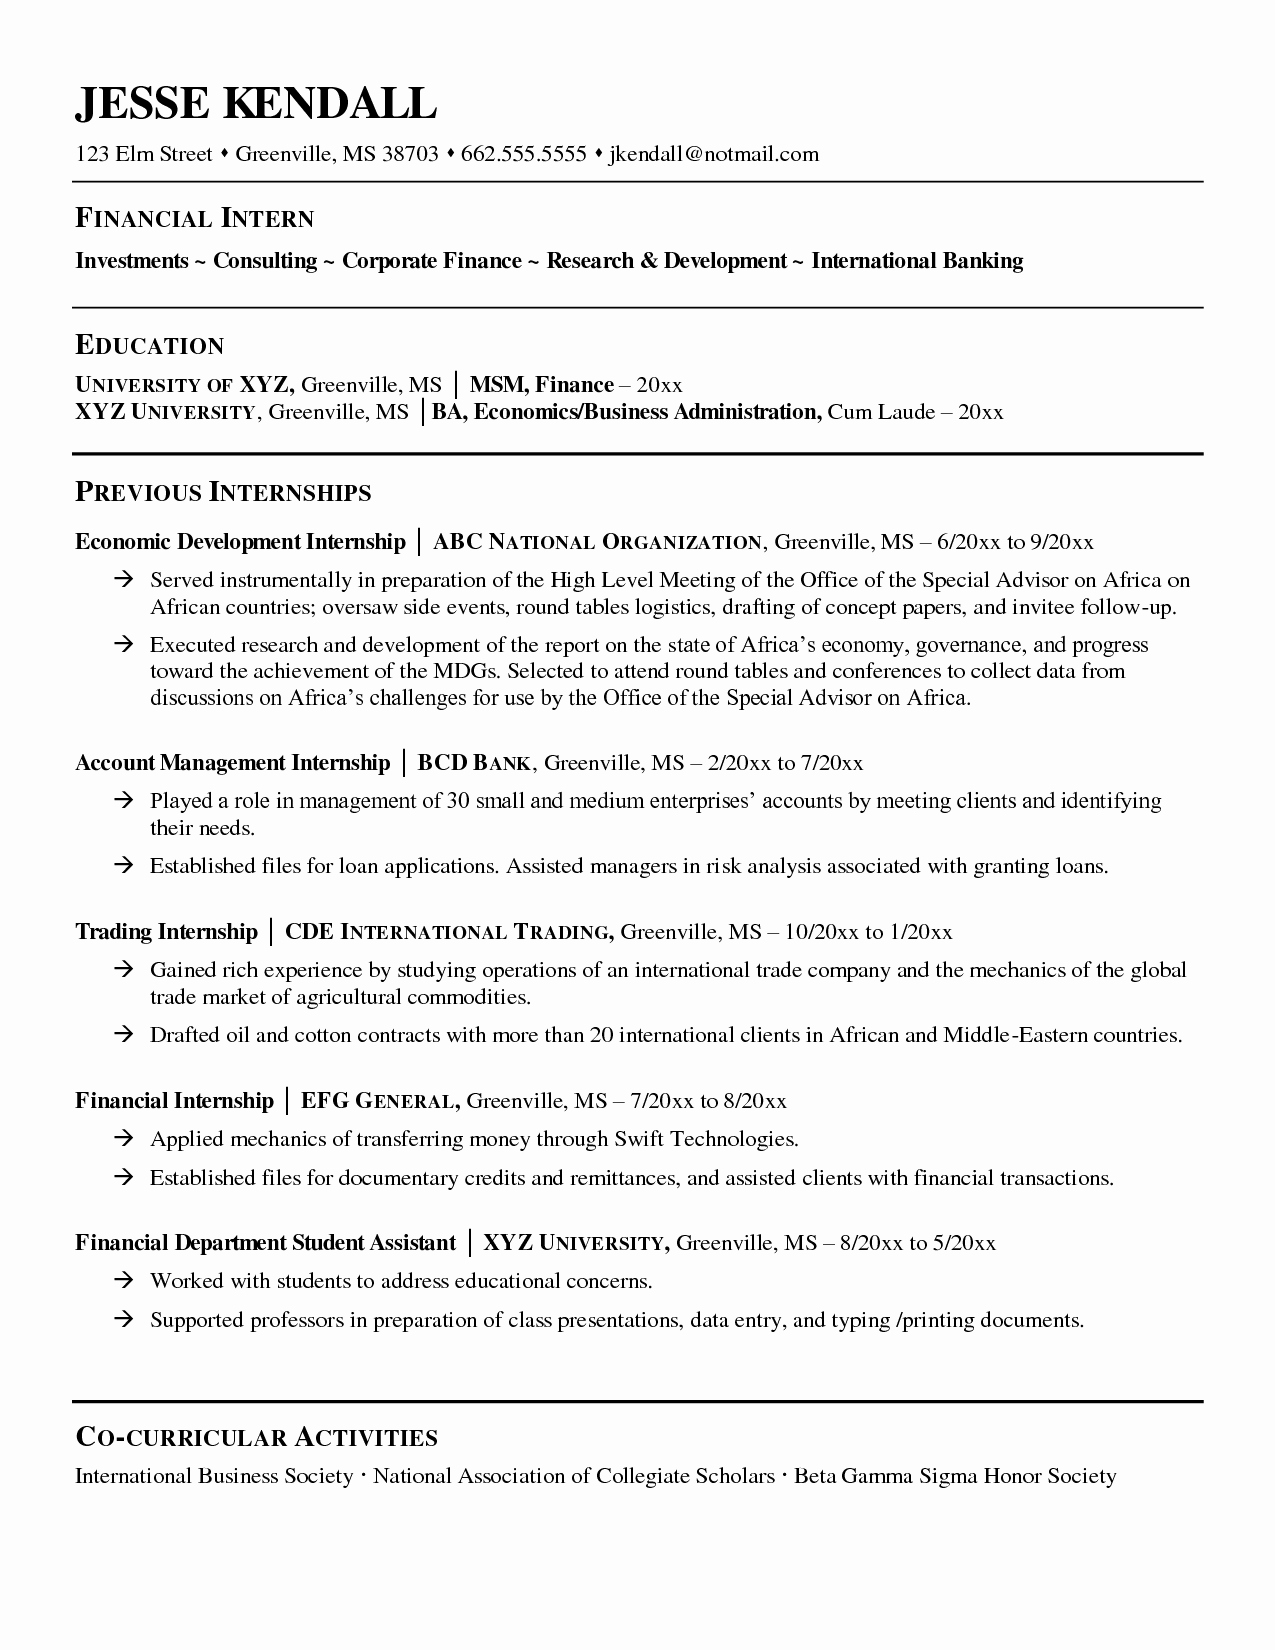 finance internship resume objective